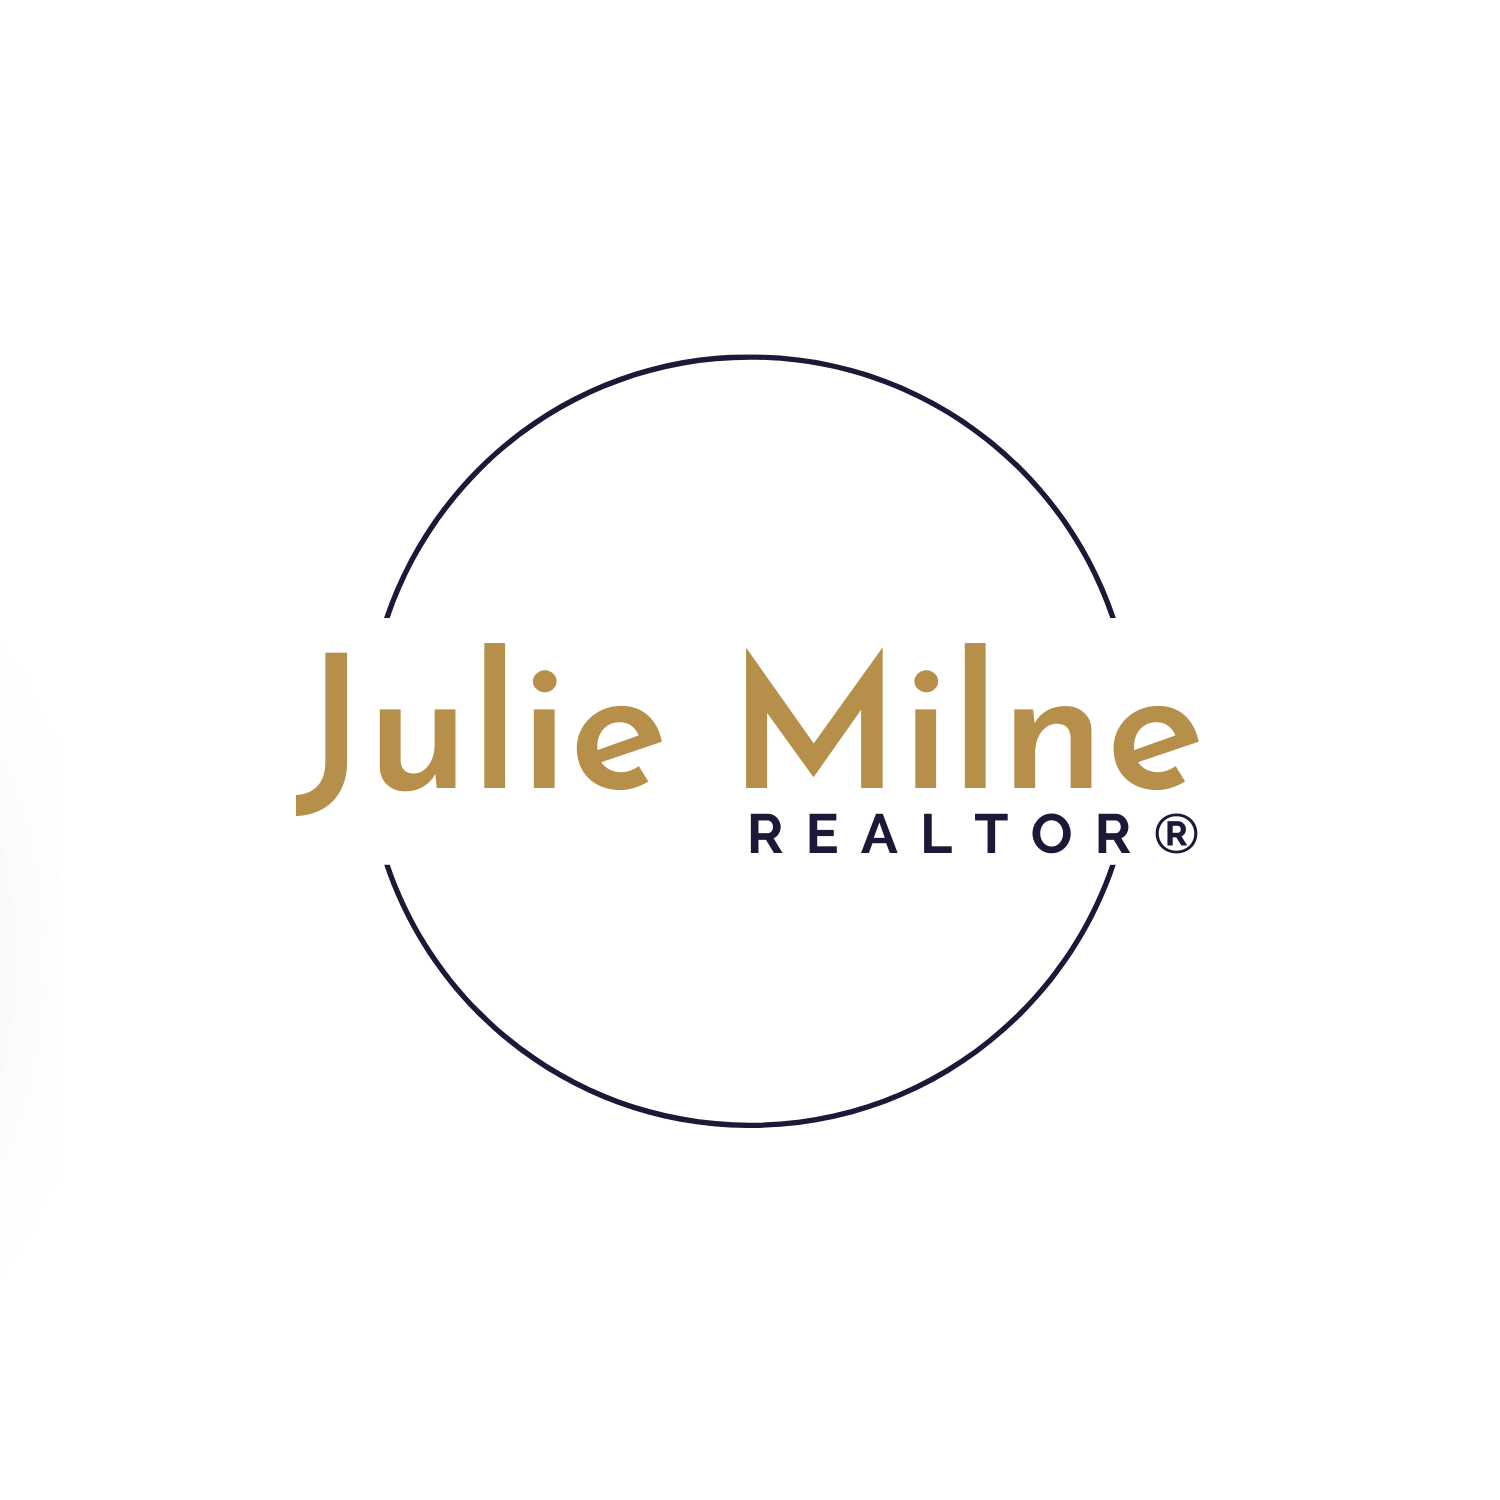 Julie Milne REALTOR® Innovation Realty